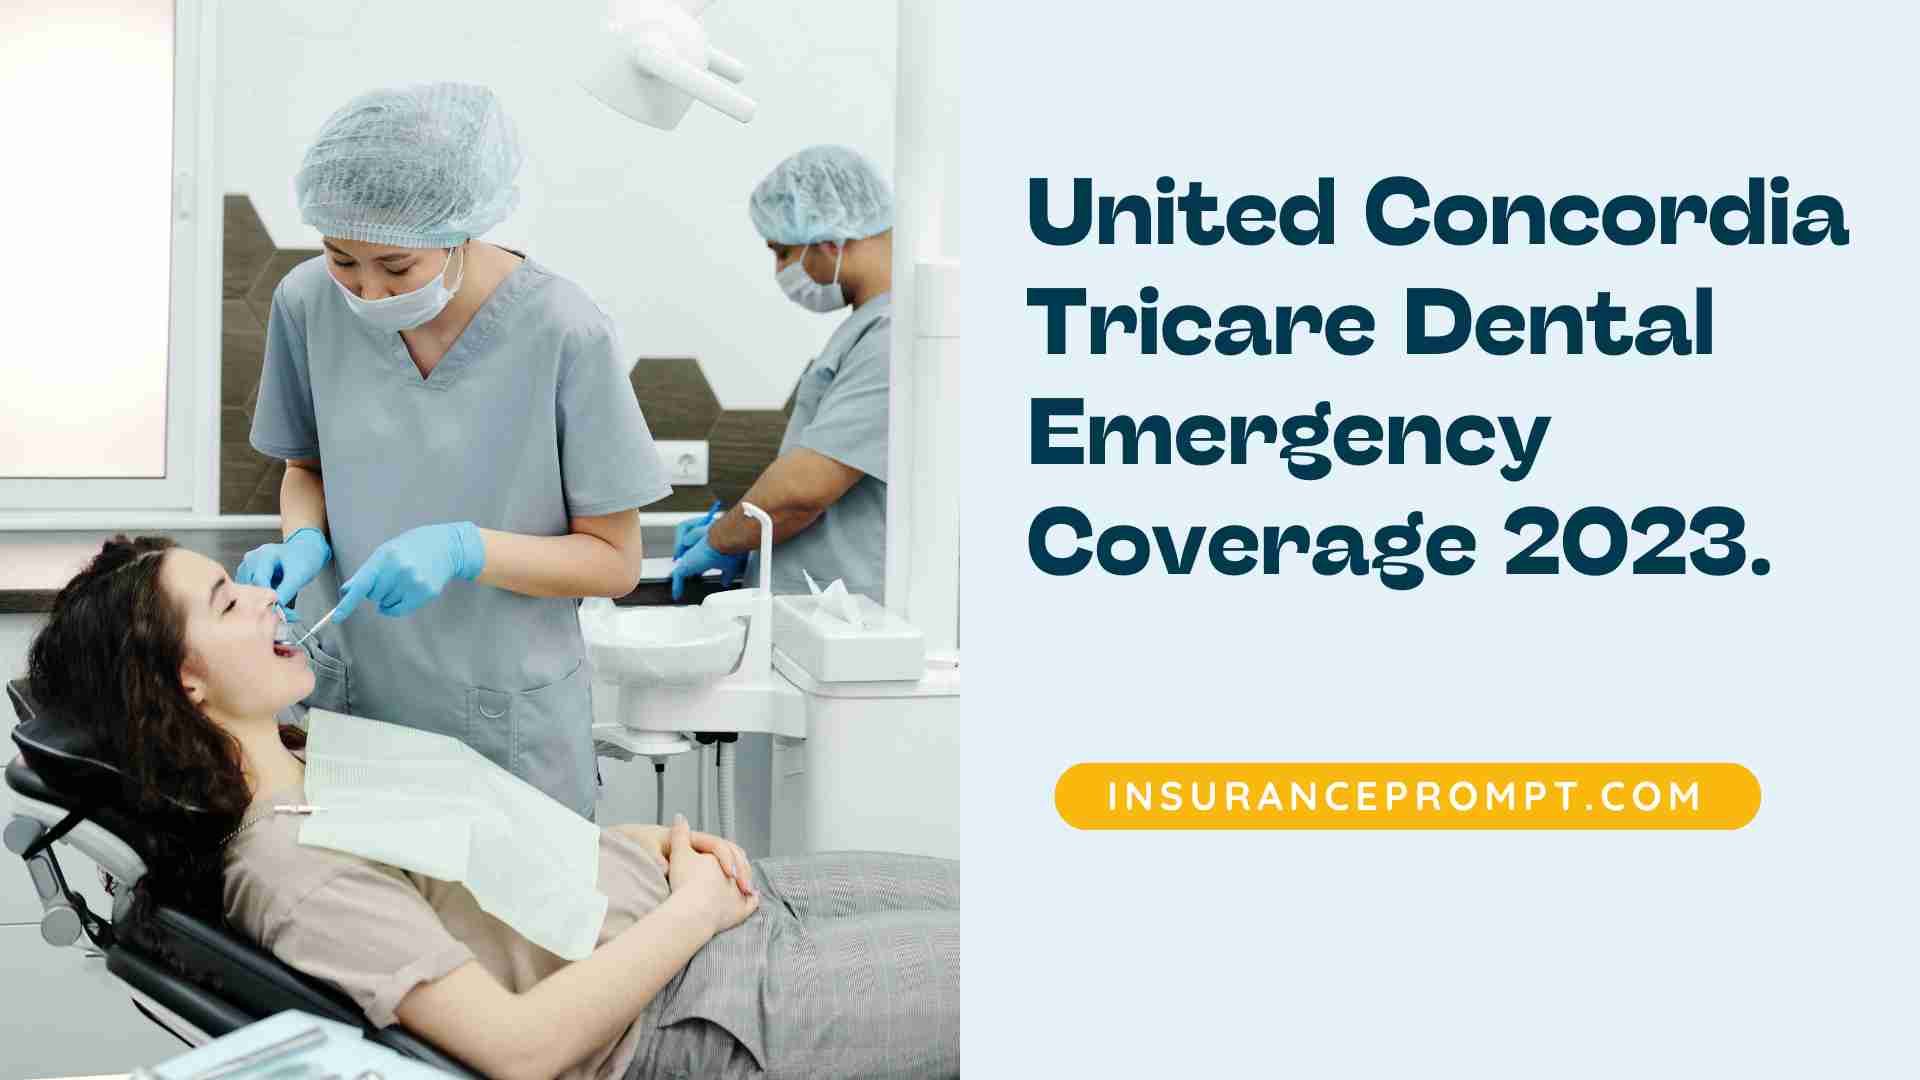 United Concordia Tricare Dental Emergency Coverage 2023